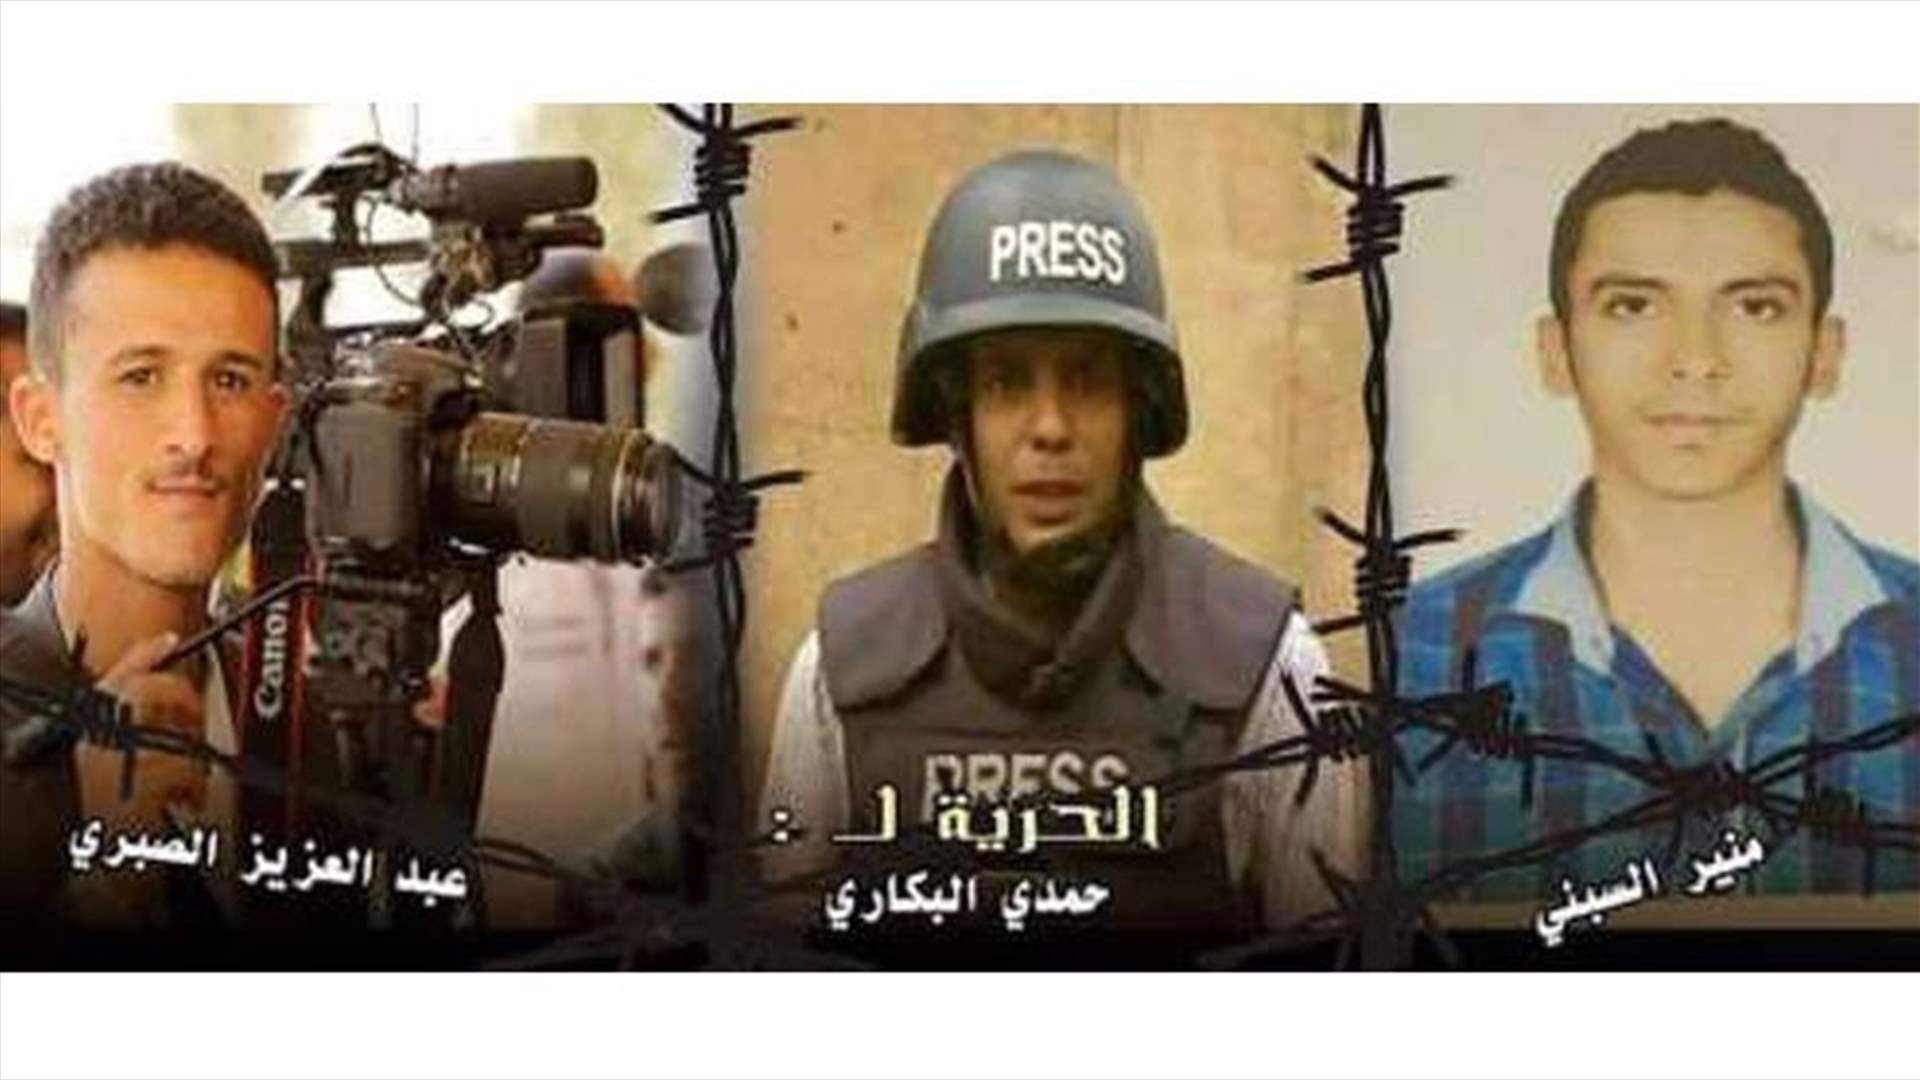 Kidnapped Al Jazeera journalists freed in Yemen - network